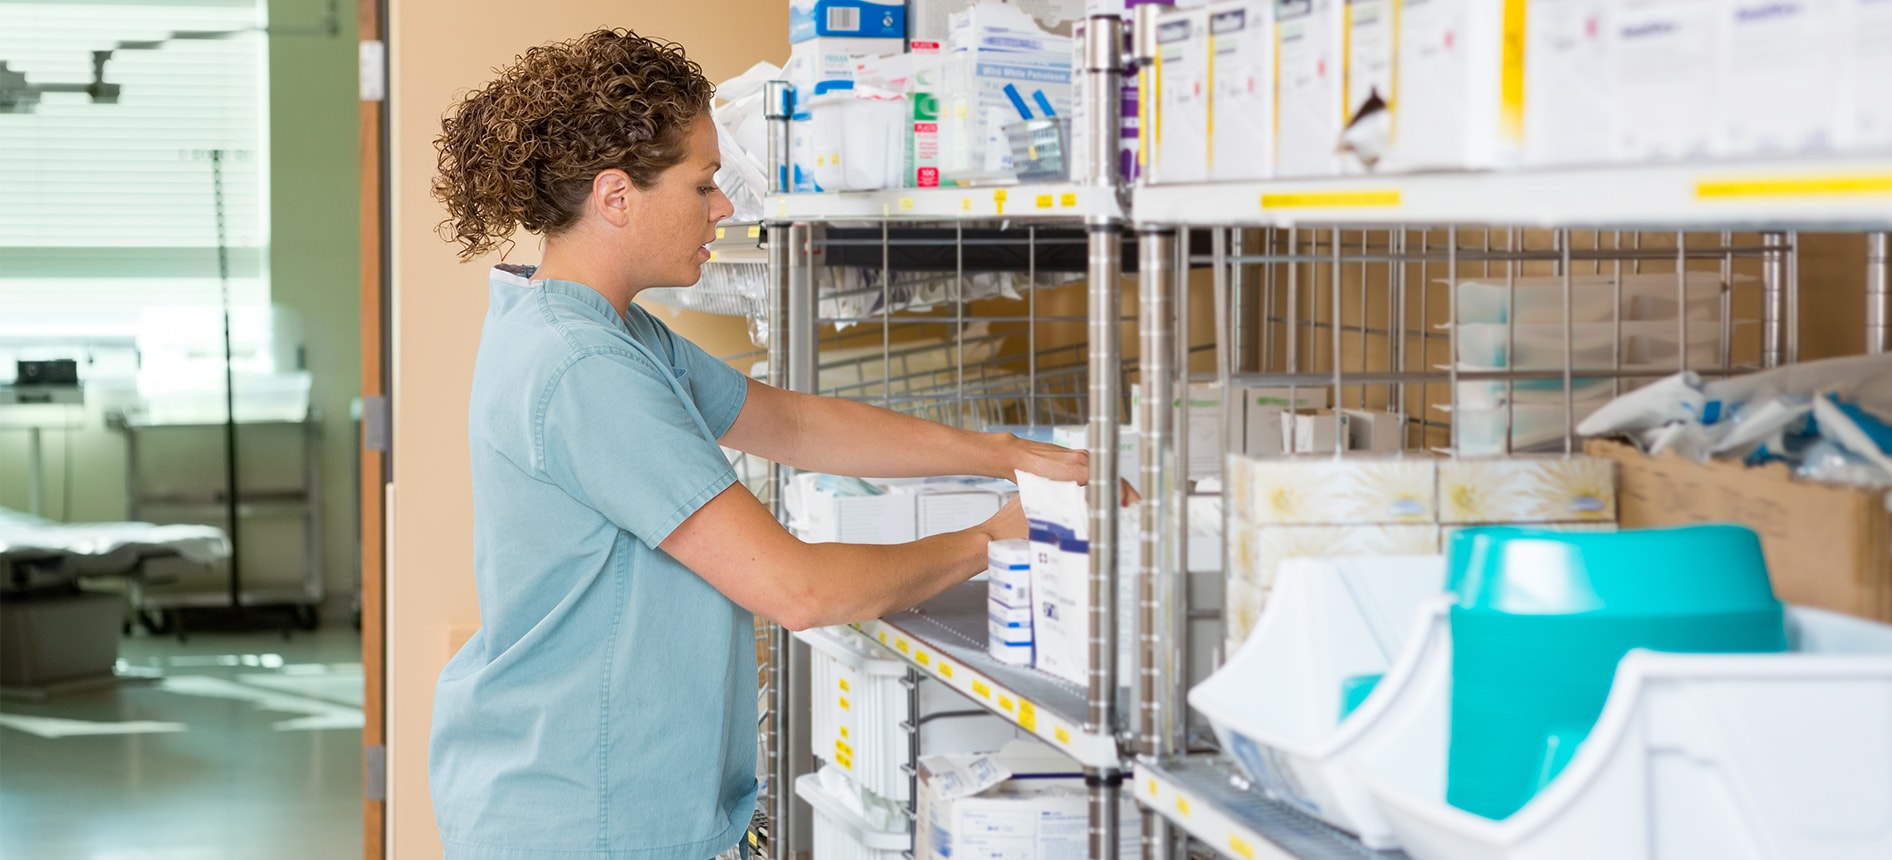 Medicine cabinet essentials include proper location, crucial basics